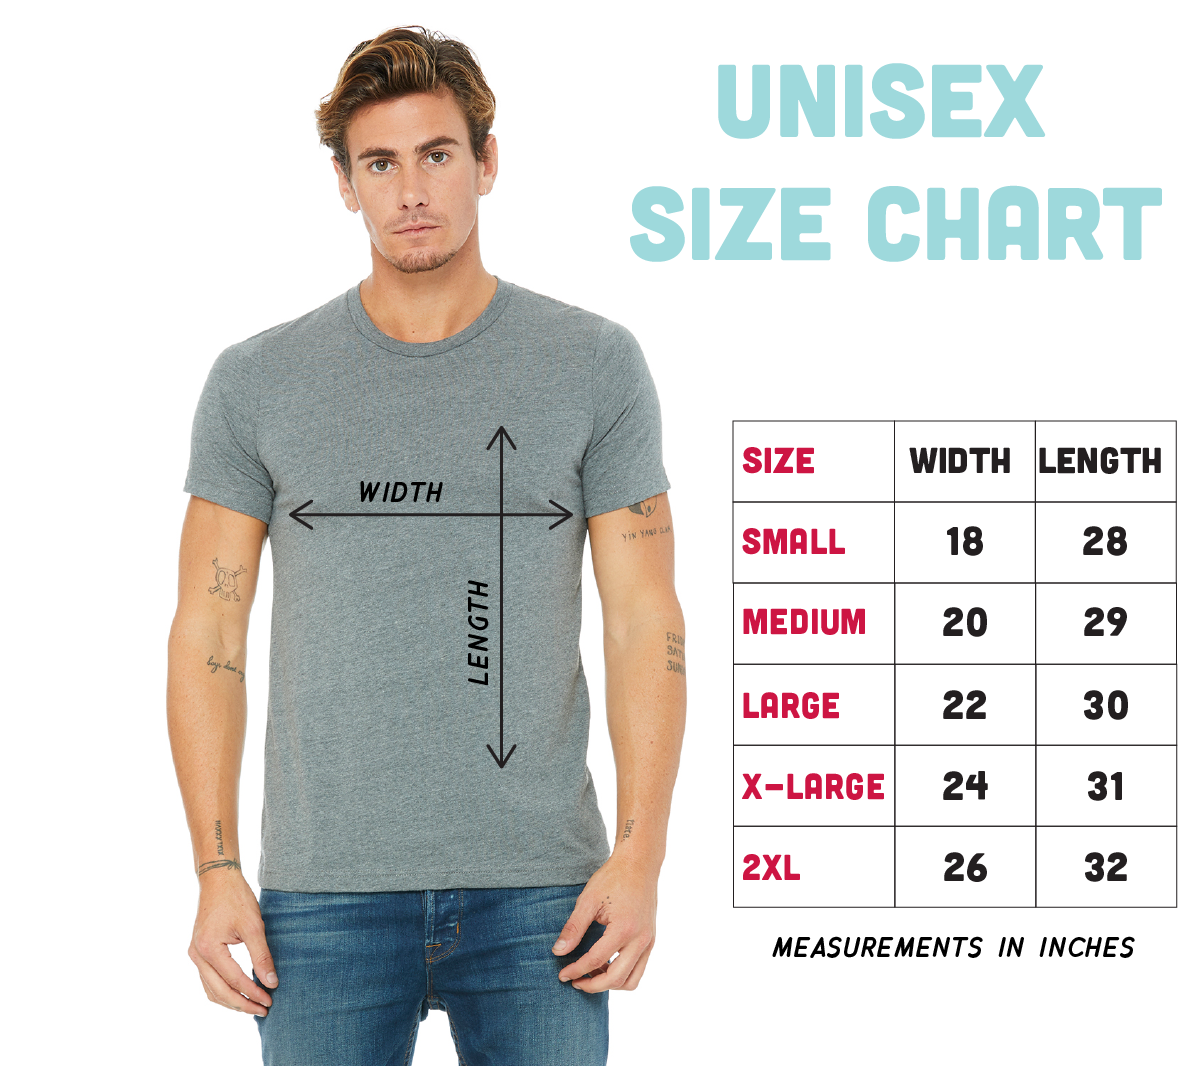 Crow Unisex Graphic T-Shirt